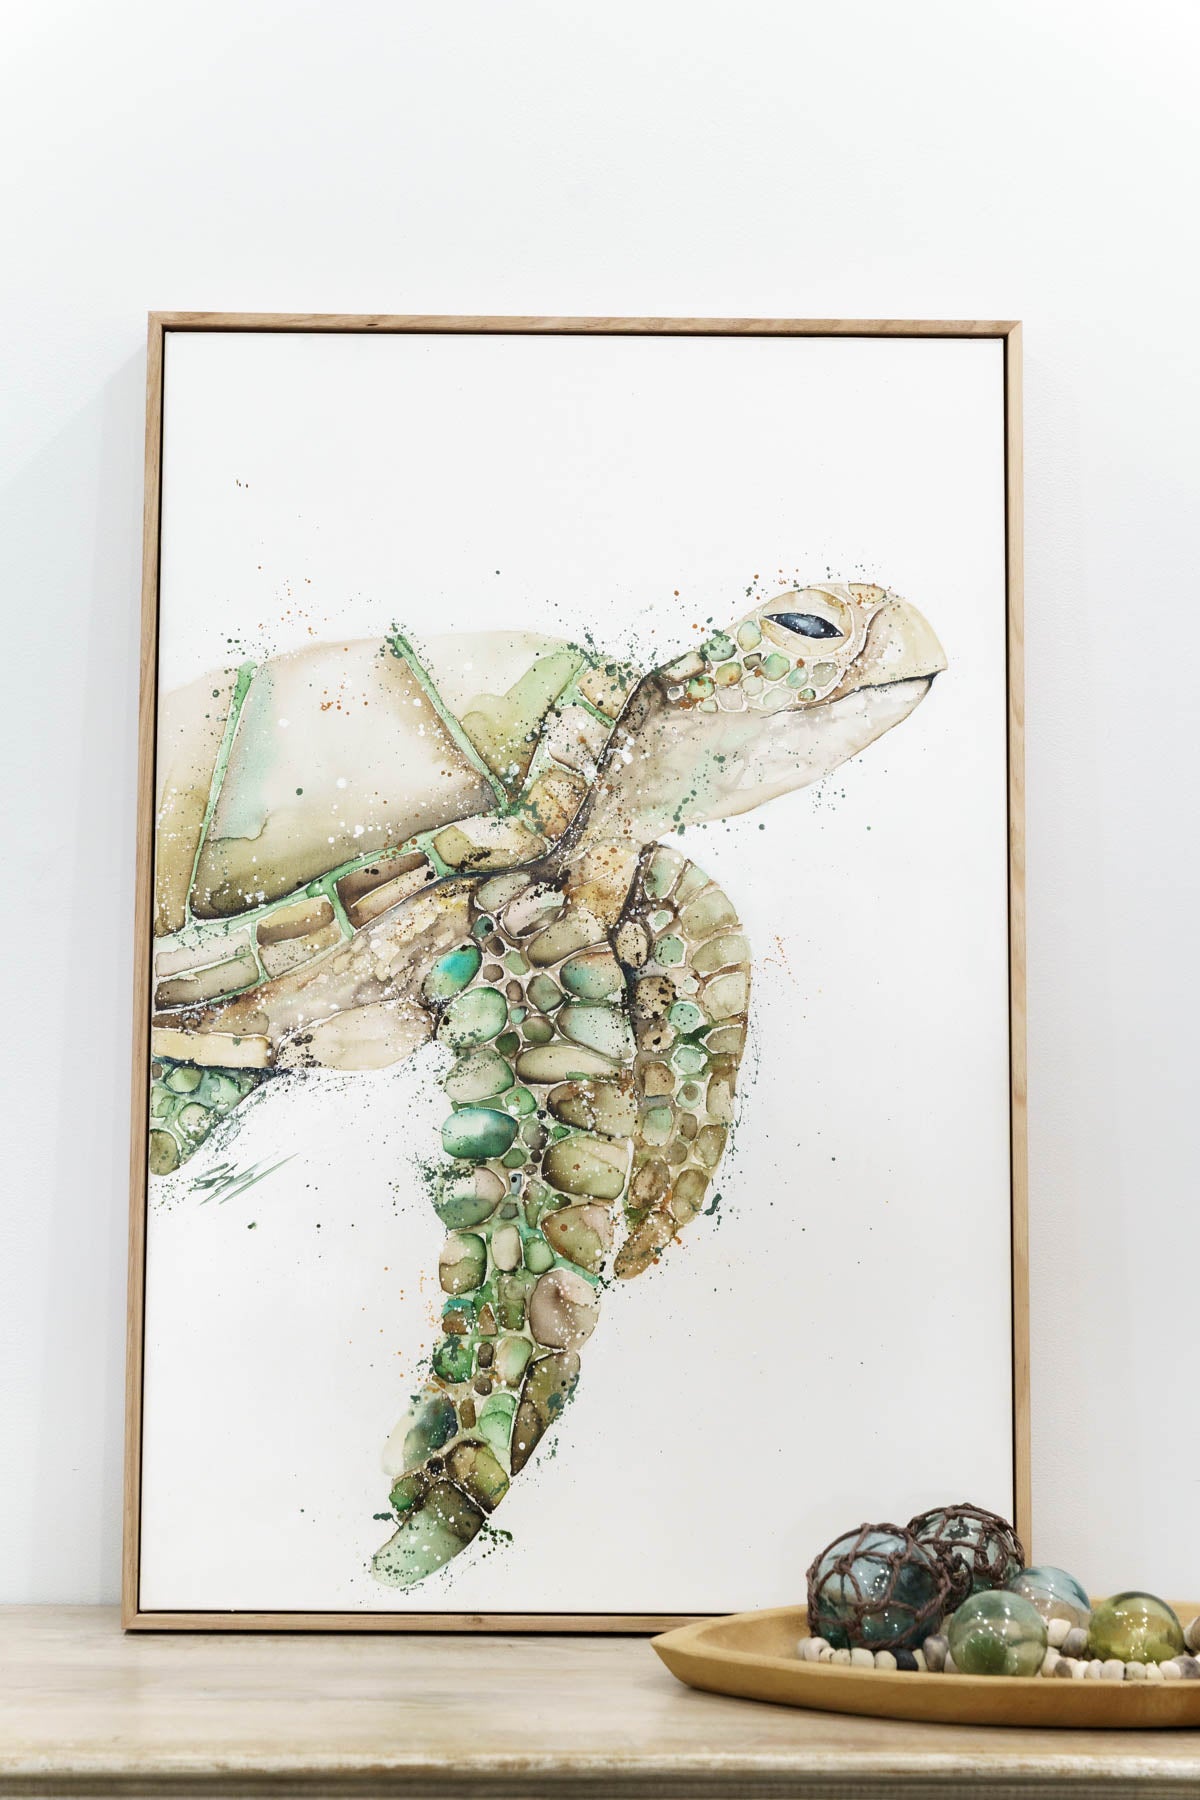 Portrait Turtle original canvas artwork in oak frame